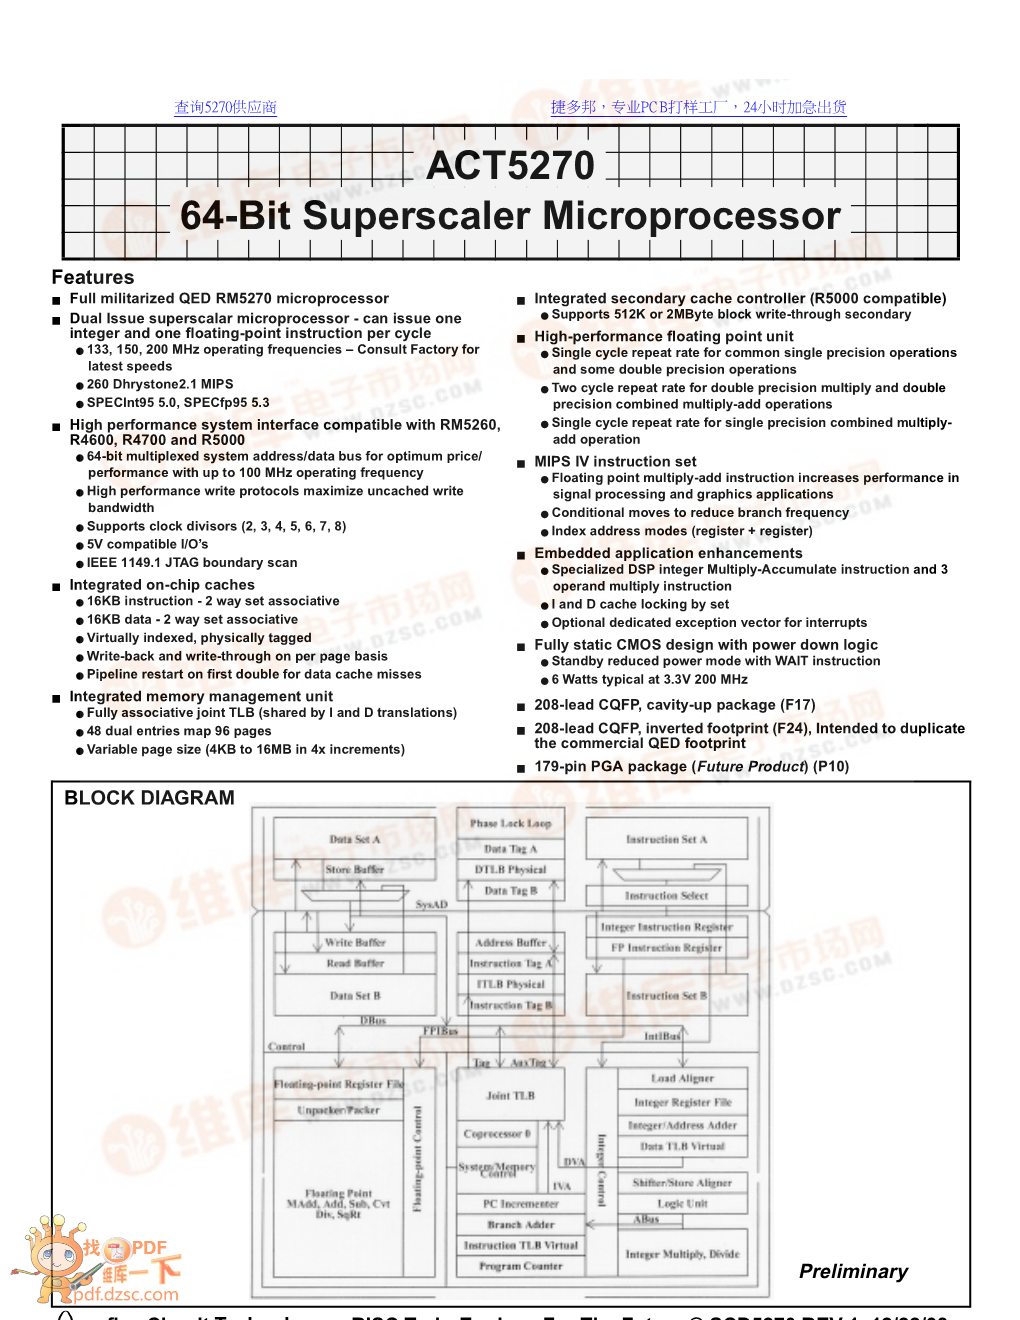 64-Bit Superscaler Microprocessor ACT5270